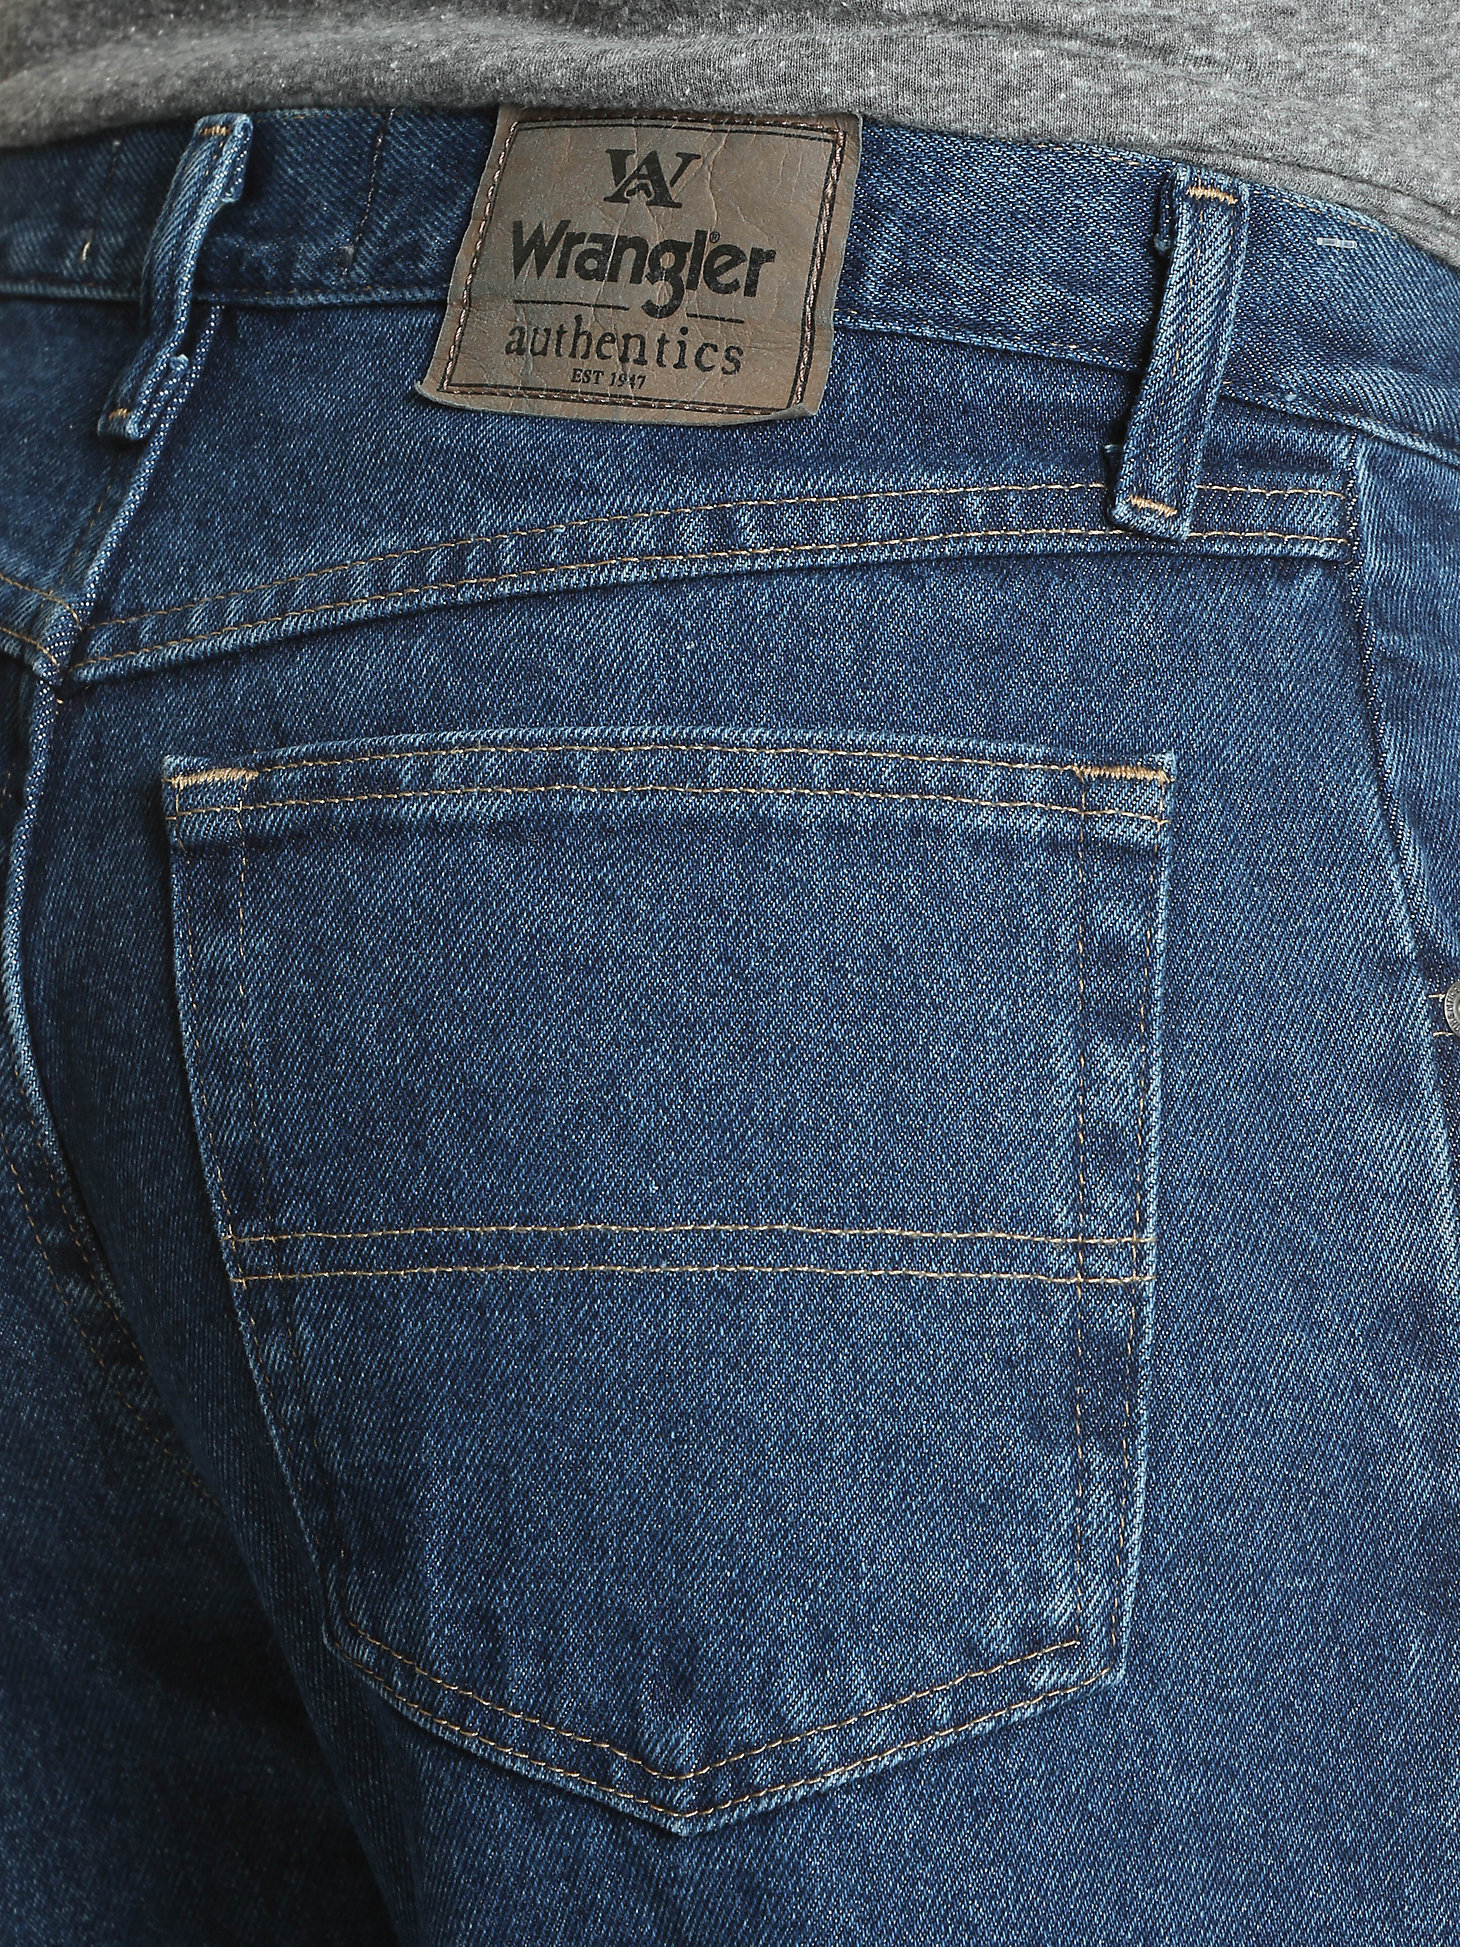 Men's Wrangler Authentics® Relaxed Fit Cotton Jean in Dark Stonewash alternative view 3